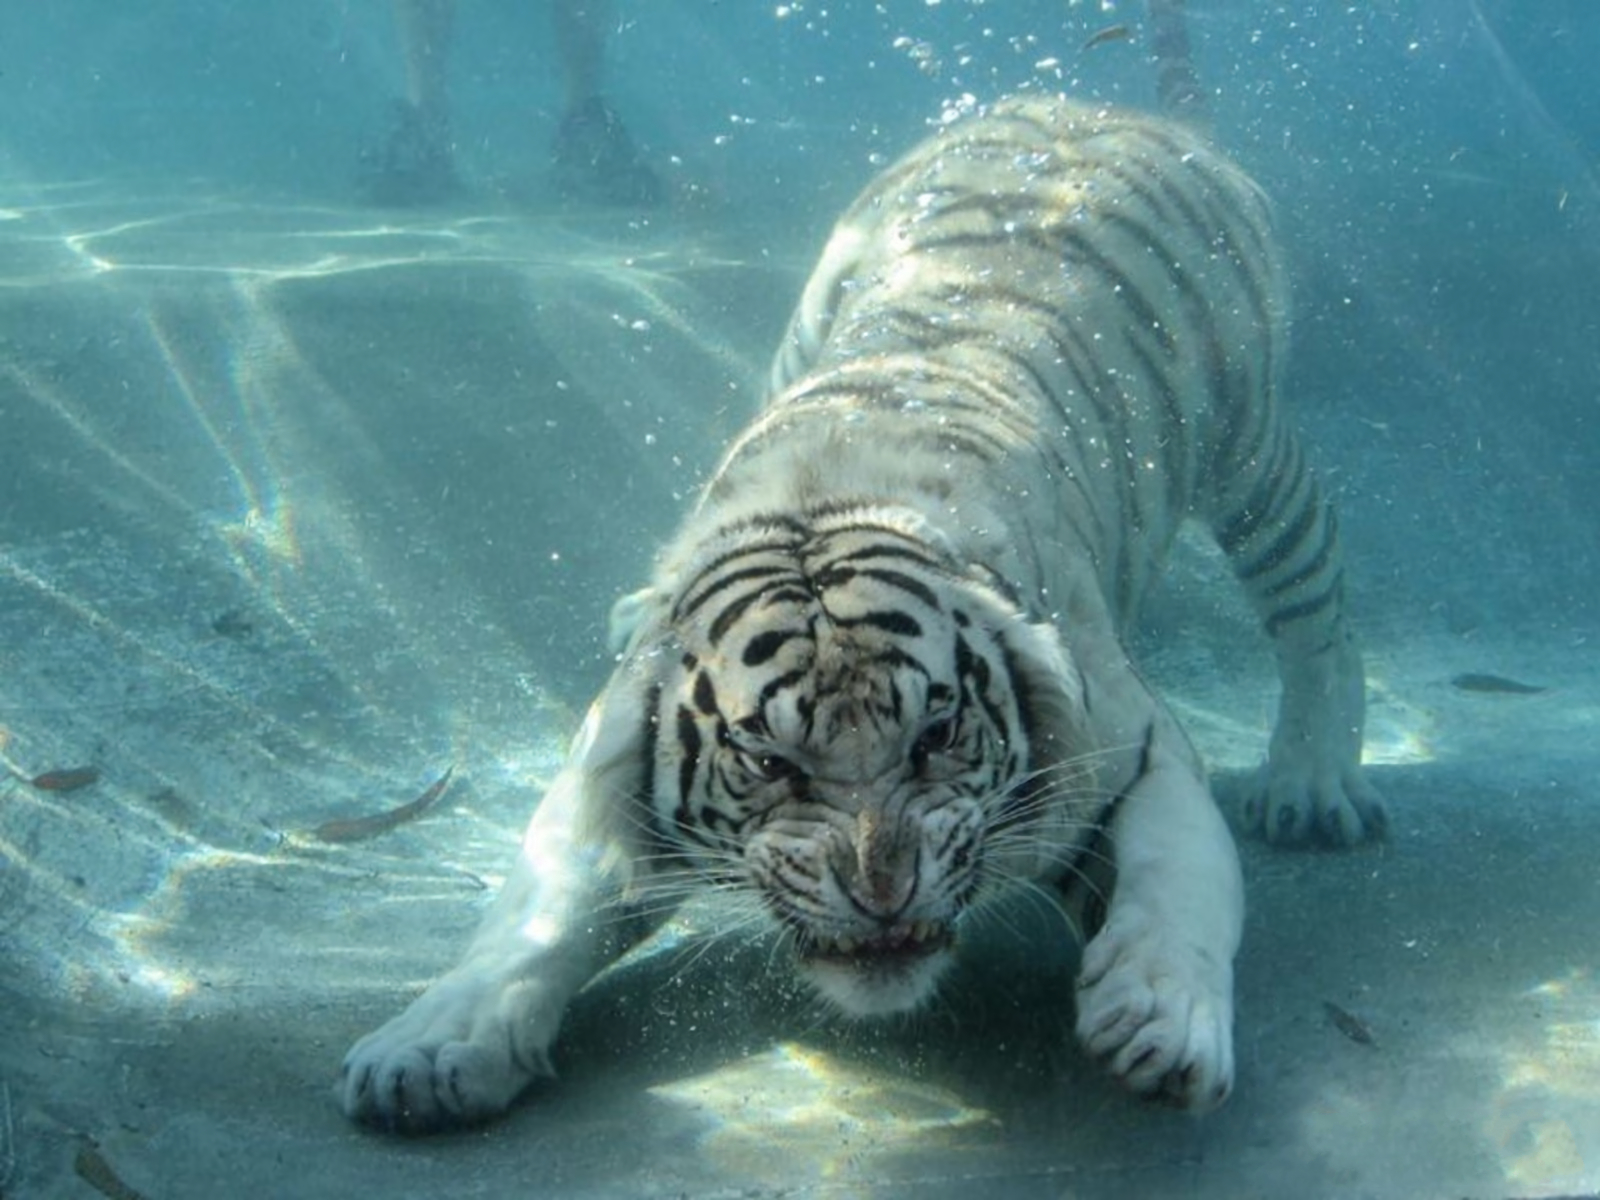 384587 descargar imagen animales, tigre blanco, tigre, submarina, zoo, gatos: fondos de pantalla y protectores de pantalla gratis